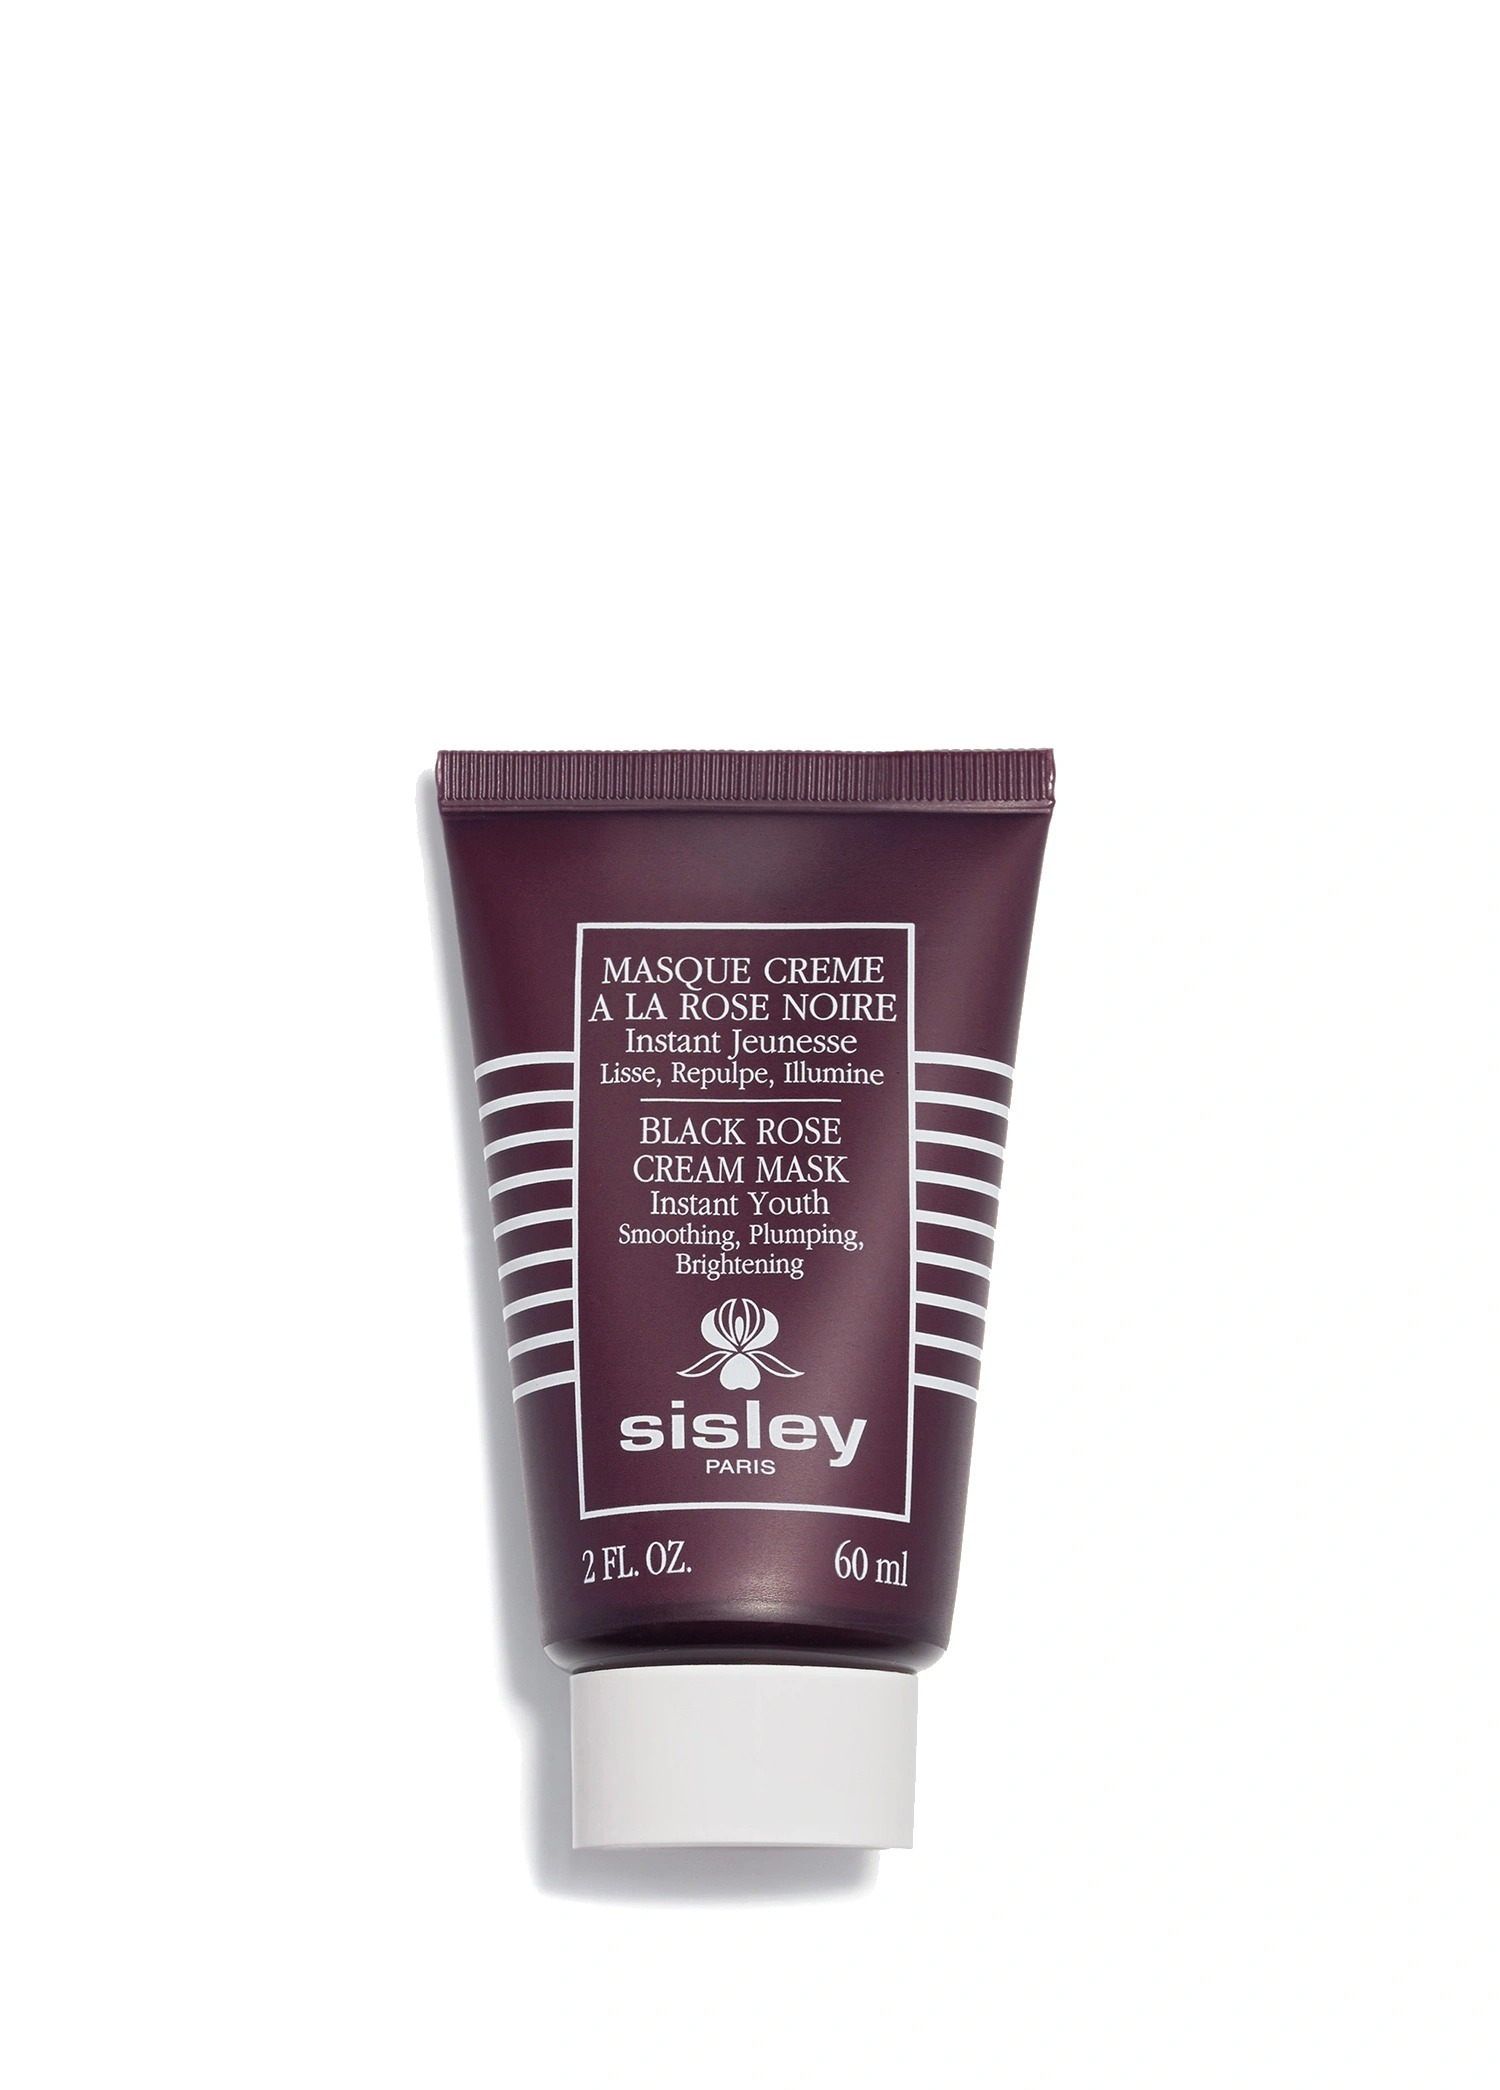 Sisley Paris - Black Rose Cream Mask  - 60 ml